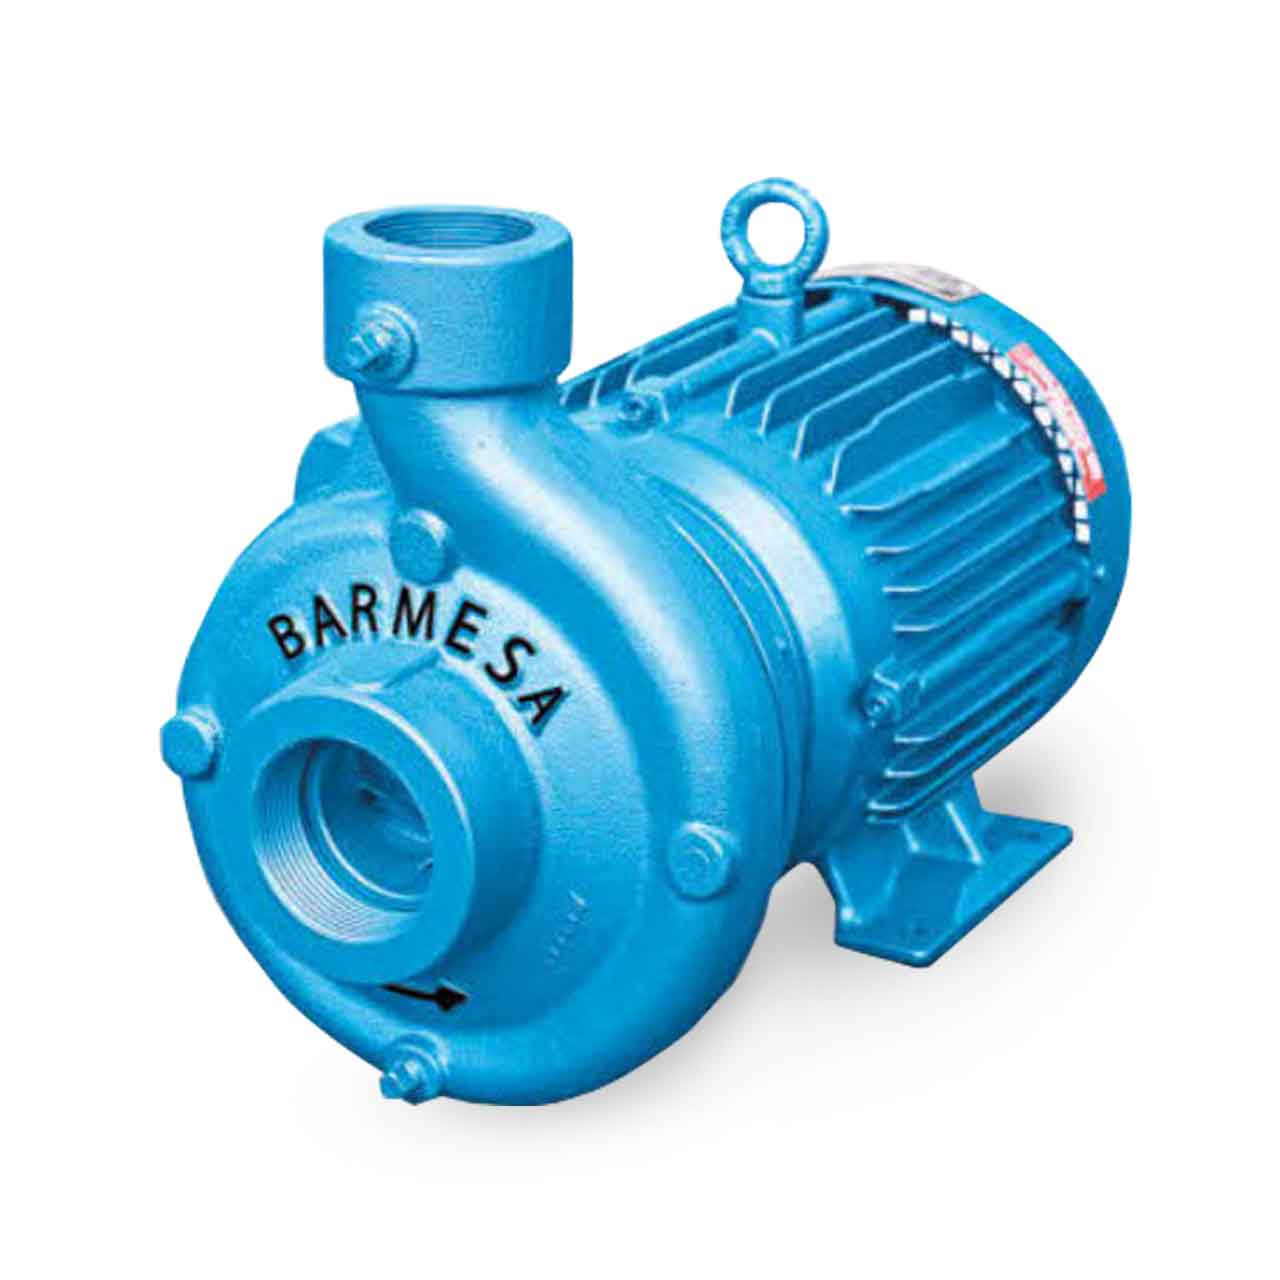 Barmesa Pumps 62210009 End Suction Centrifugal Close Coupled Pumps ODP Enclosure IA Series Cast Iron/Steel 20 hp 3 Phase IA1½ Model 2 x 1.5 x 9 